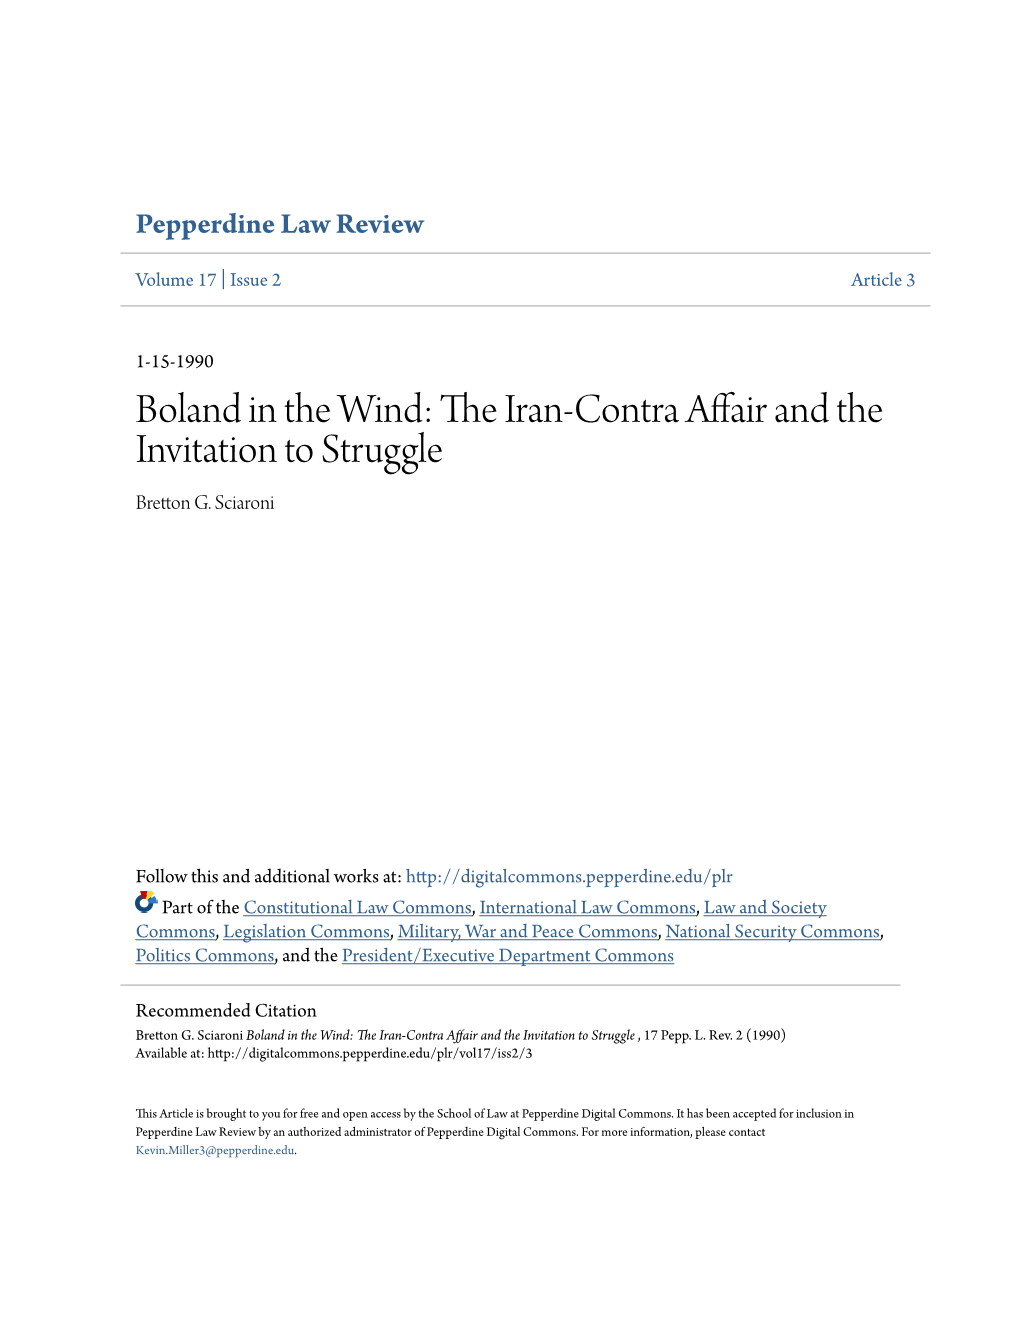 The Iran-Contra Affair and the Invitation to Struggle , 17 Pepp